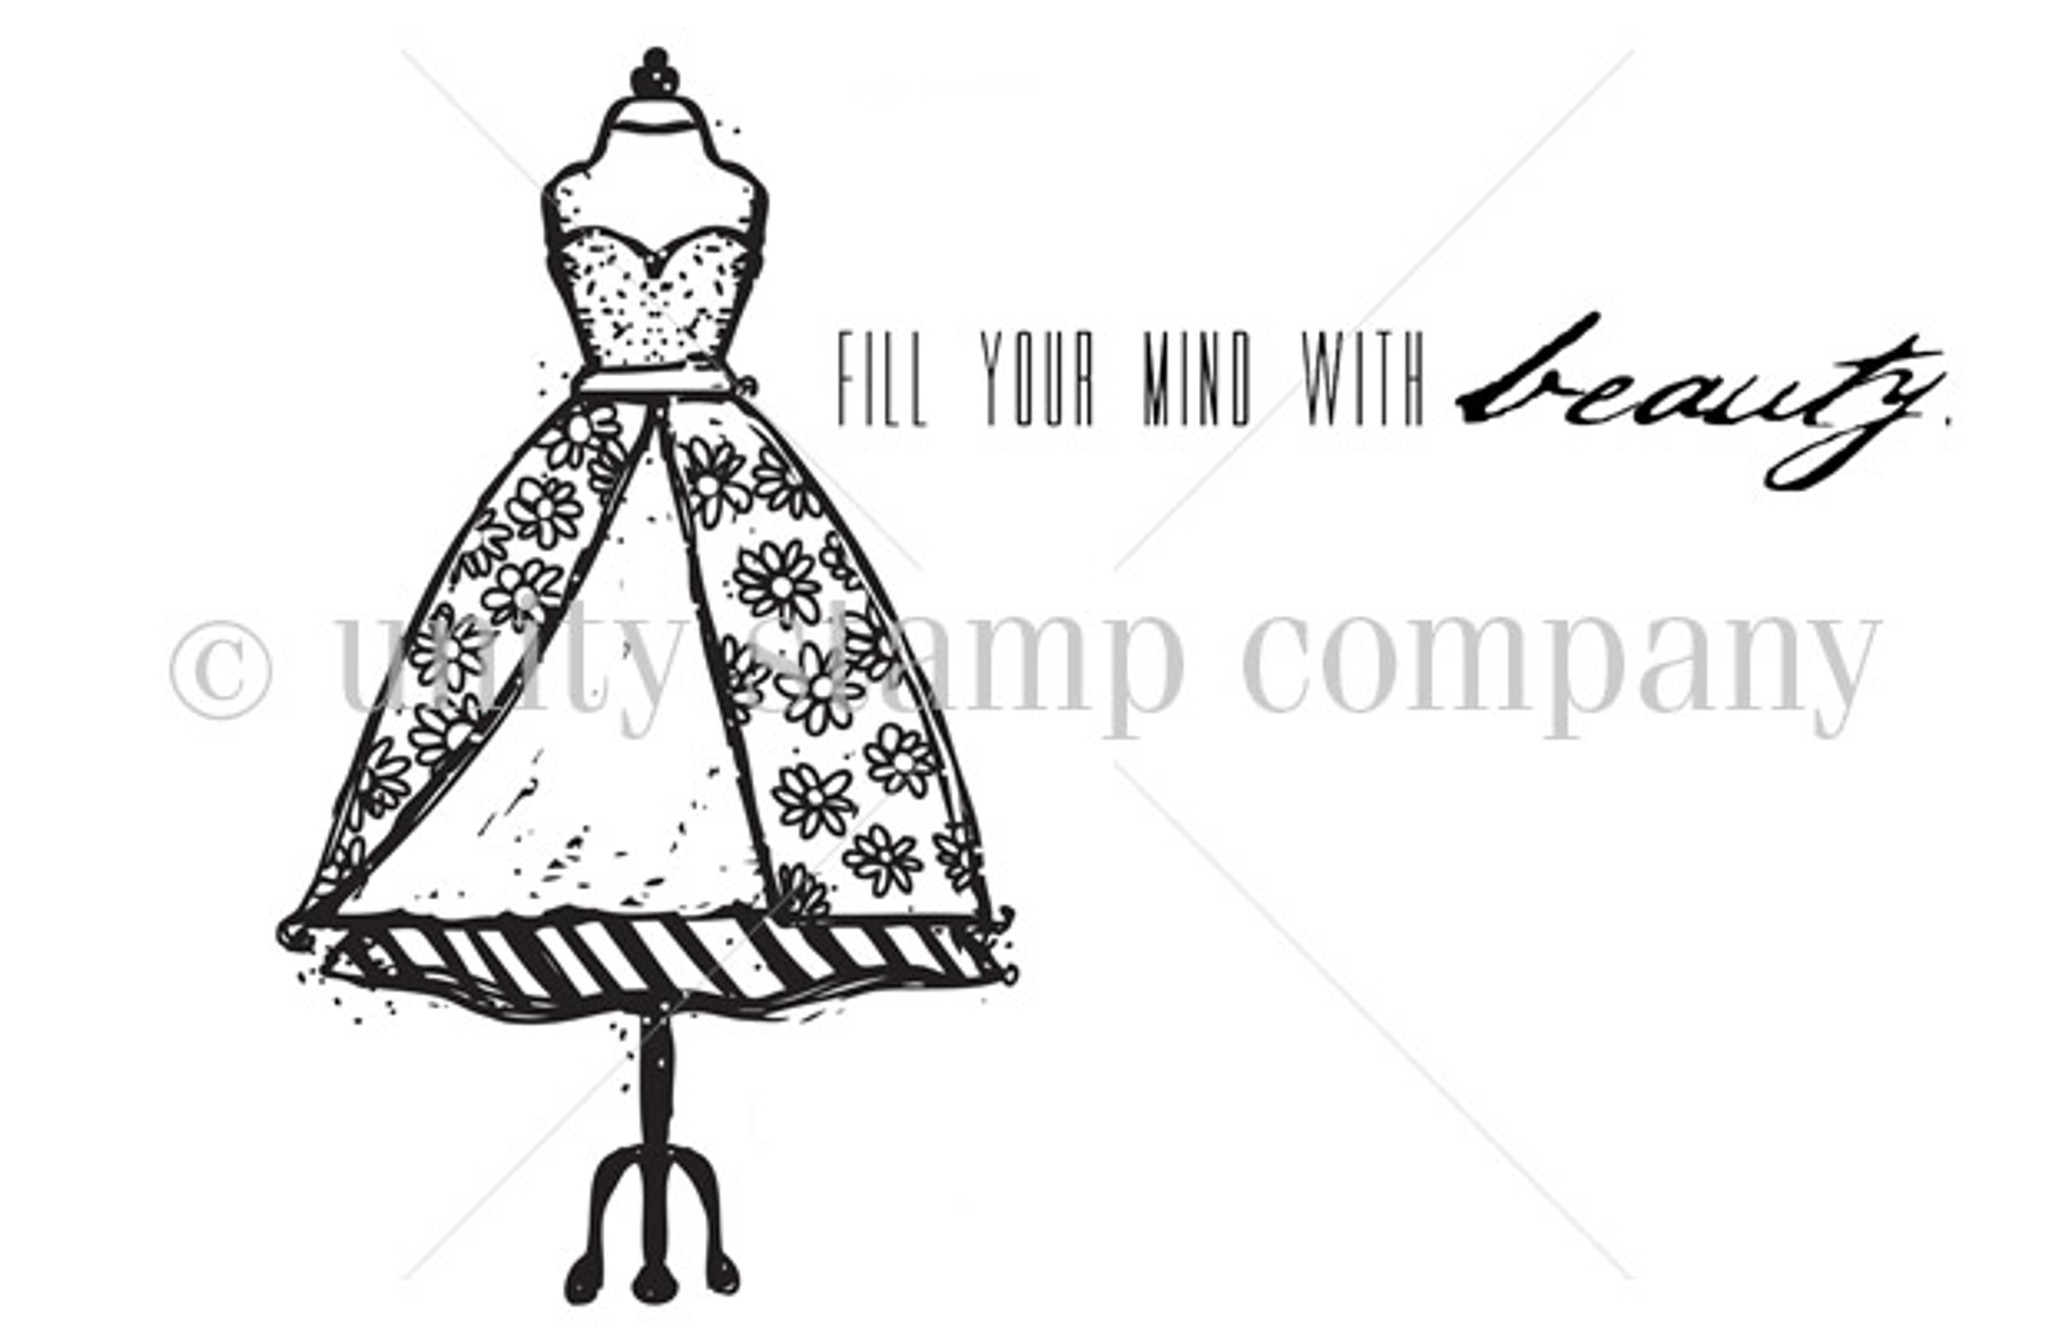 Mind & Beauty {dressform} - Unity Stamp Company